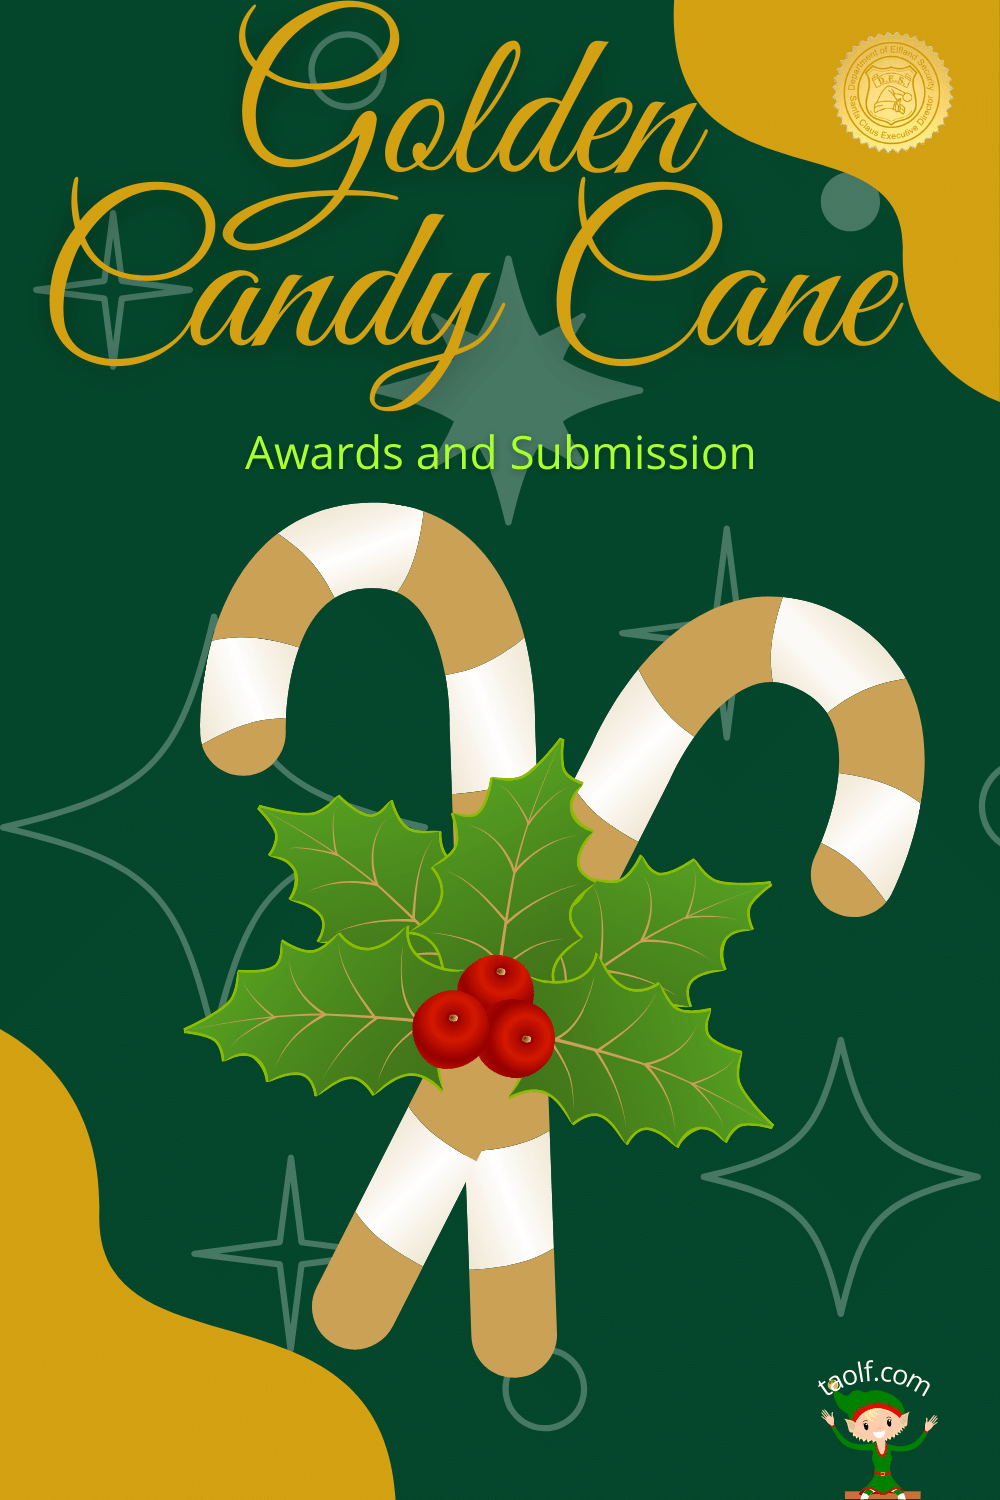 Golden Candy Cane Awards